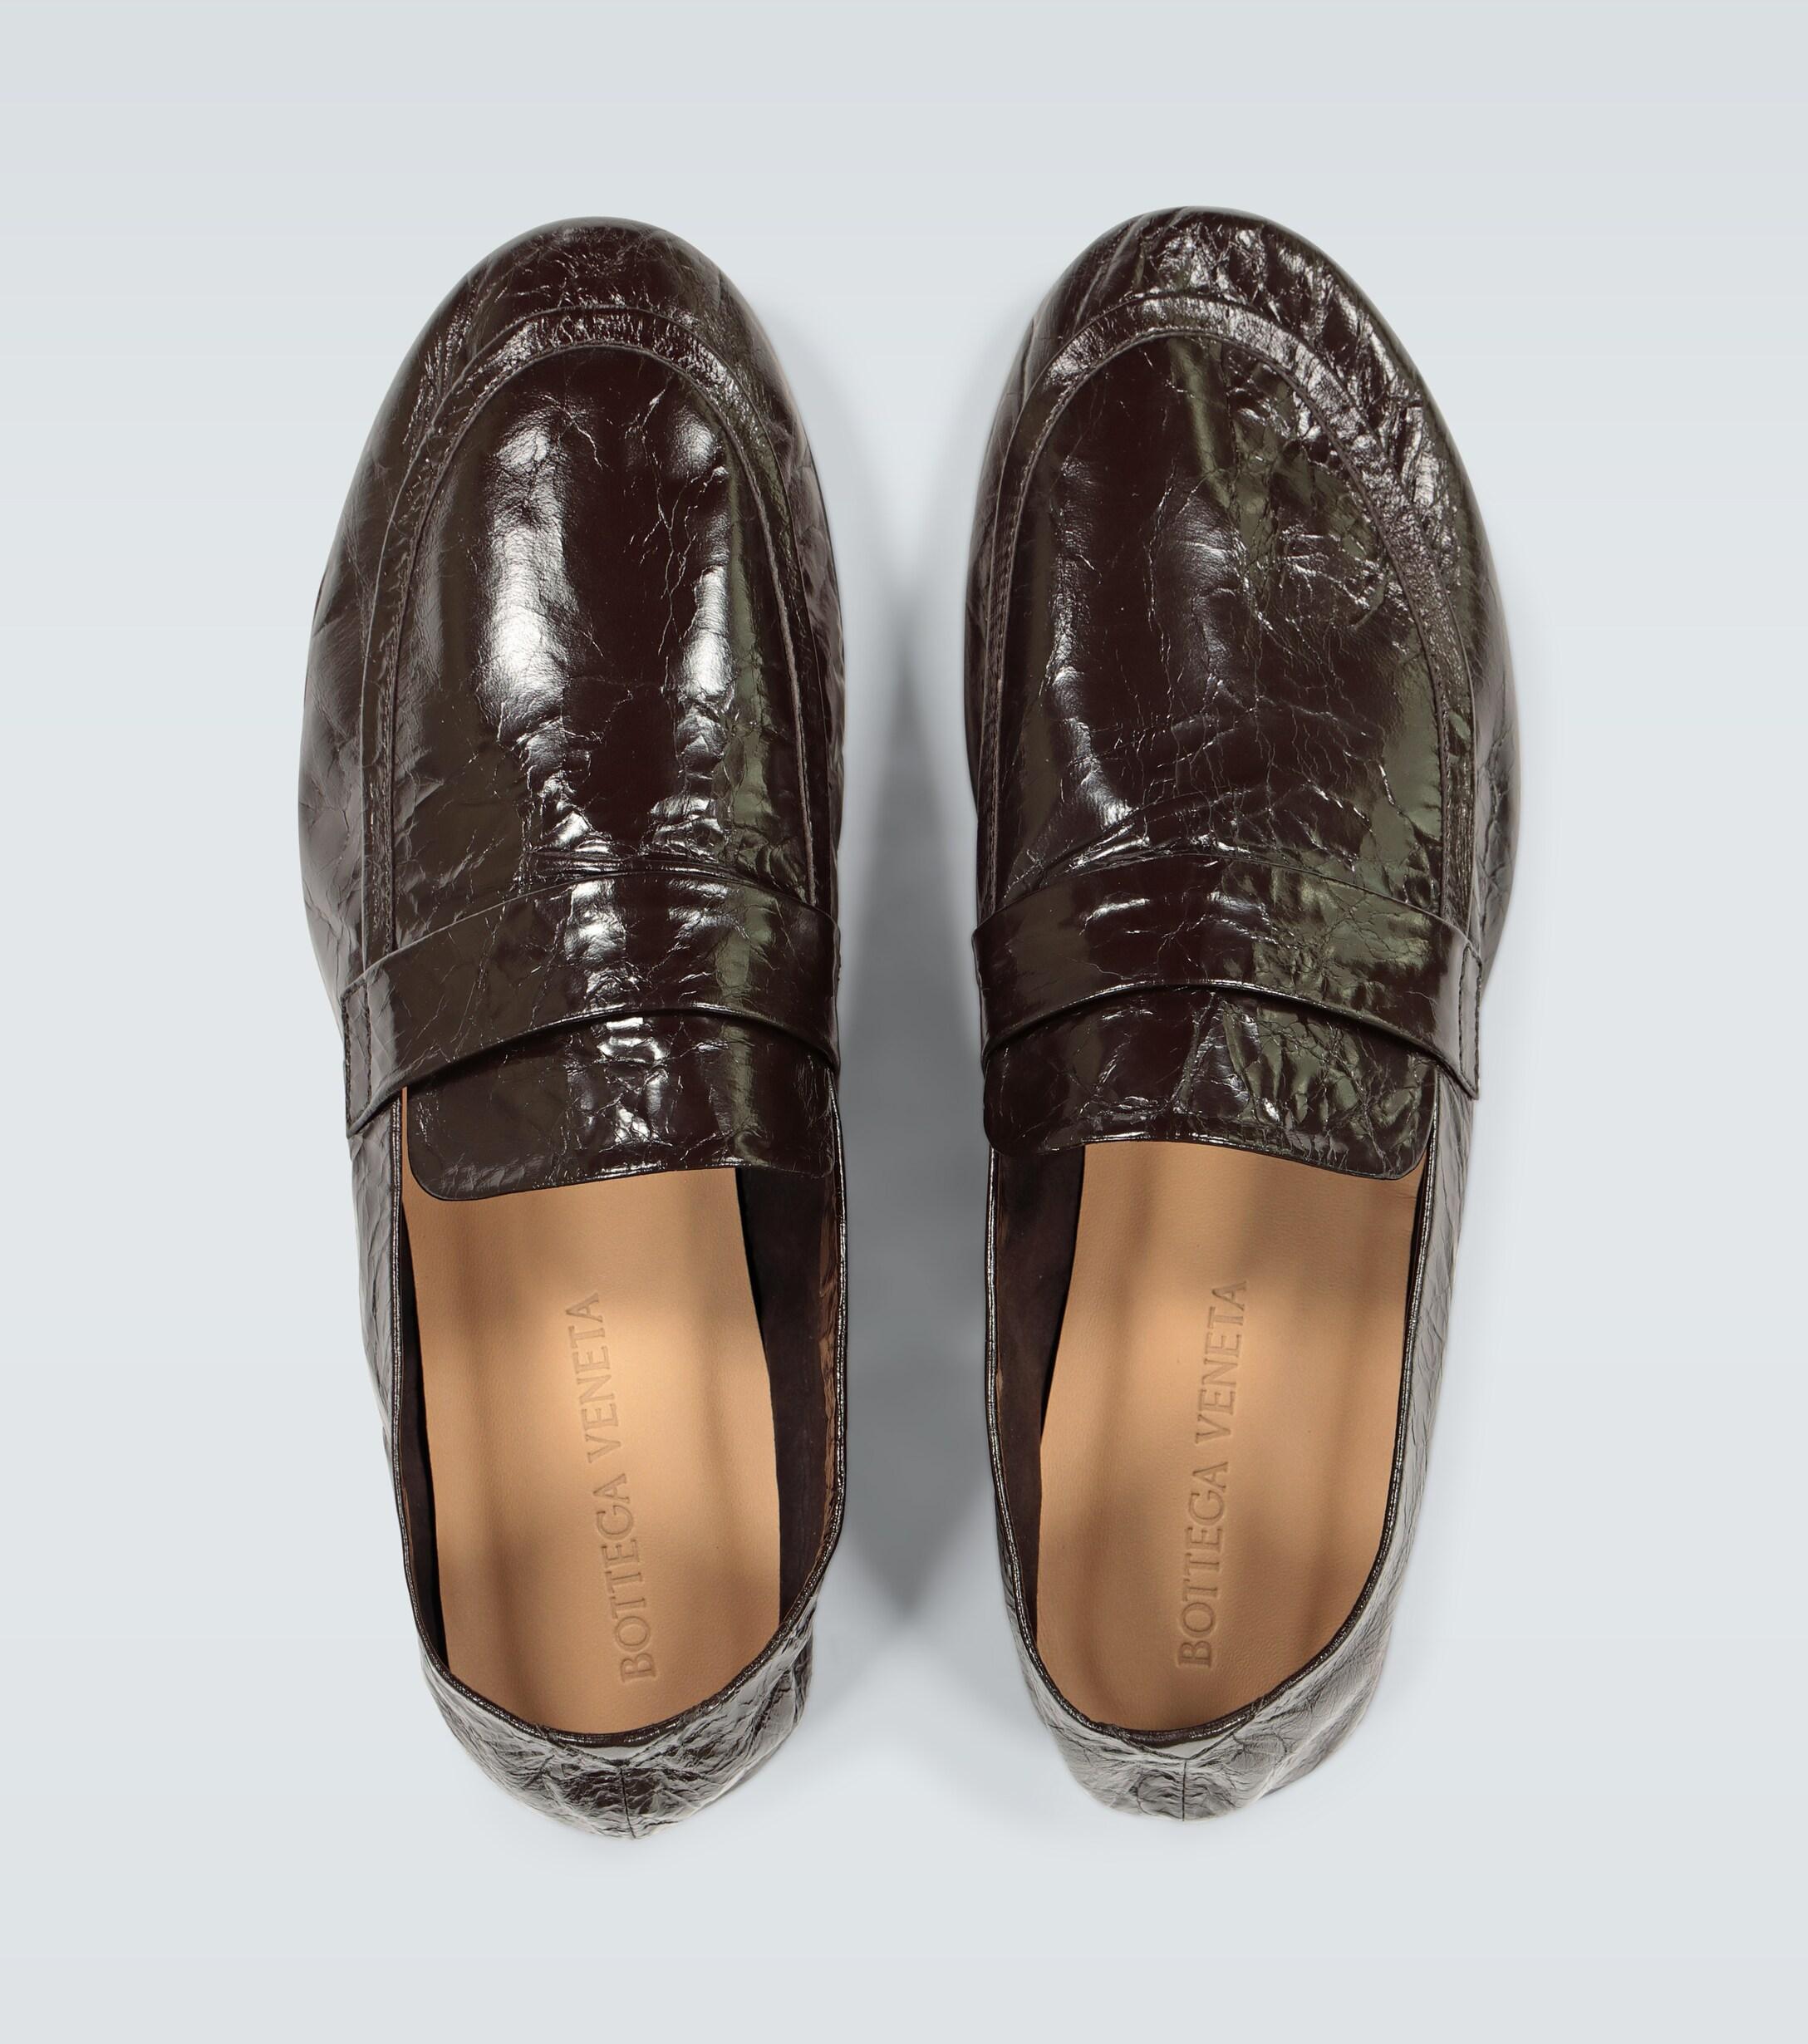 Bottega Veneta Leather Penny Loafers in Brown - Lyst